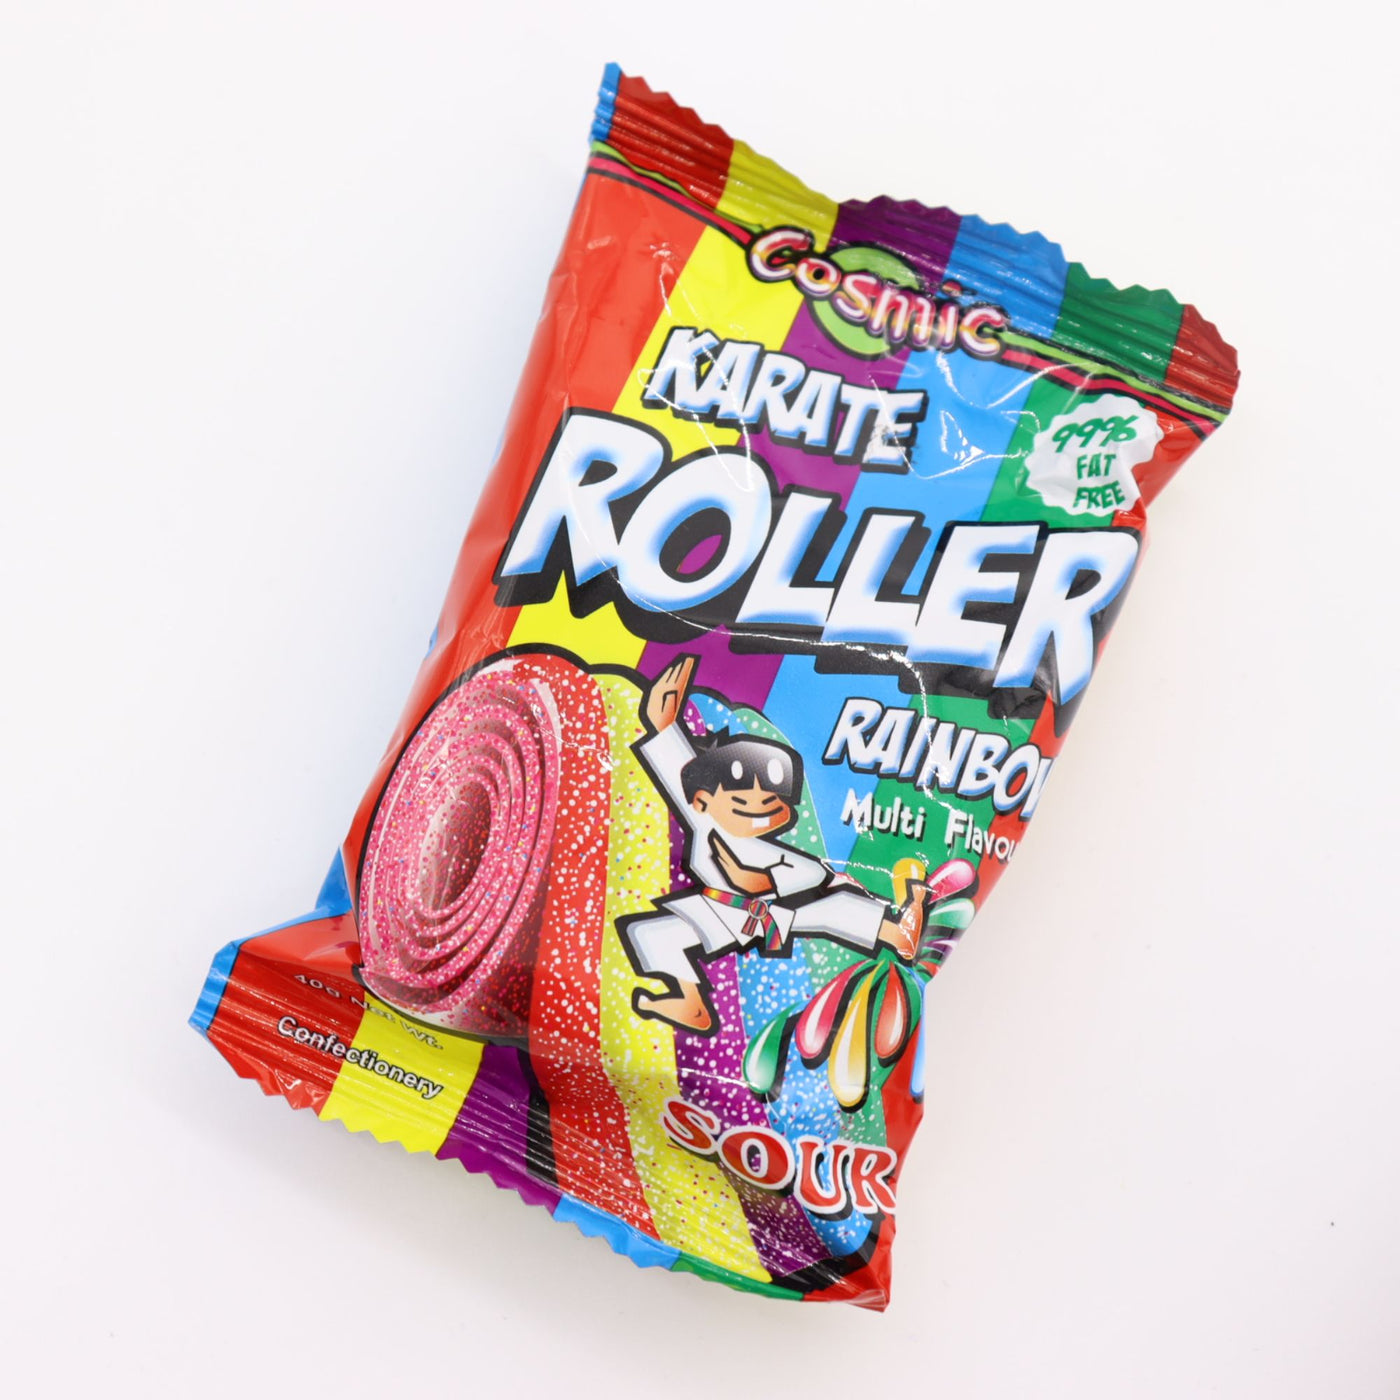 Karate Roller Multi Flavours